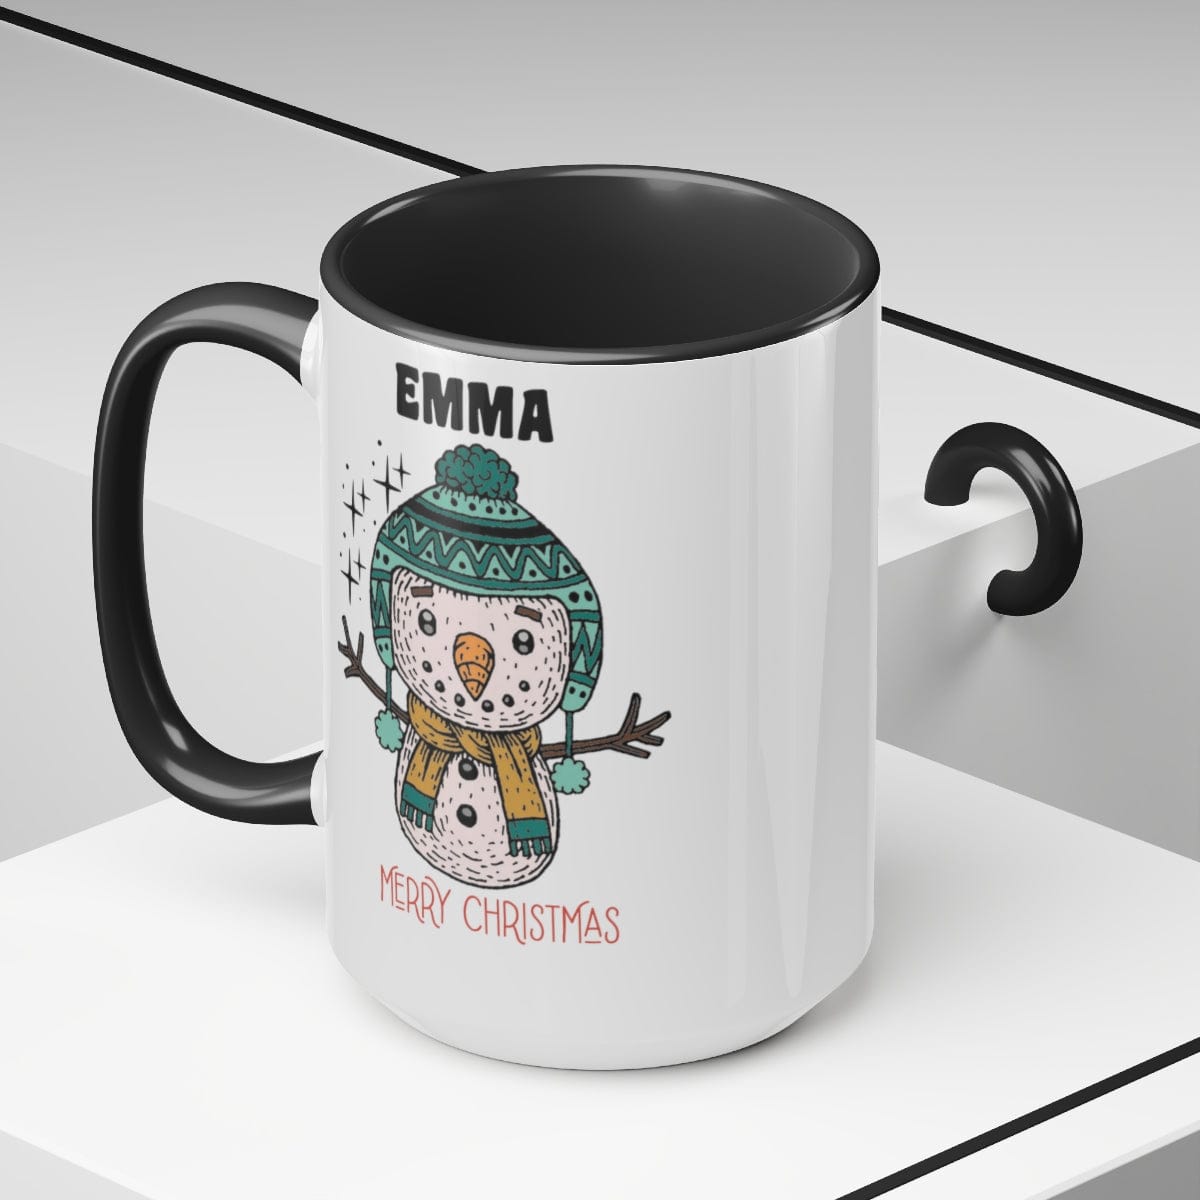 Emma Merry Christmas Mug - Christmas Decor - Gift for Friend - 15 oz Two-Tone Coffee Mugs